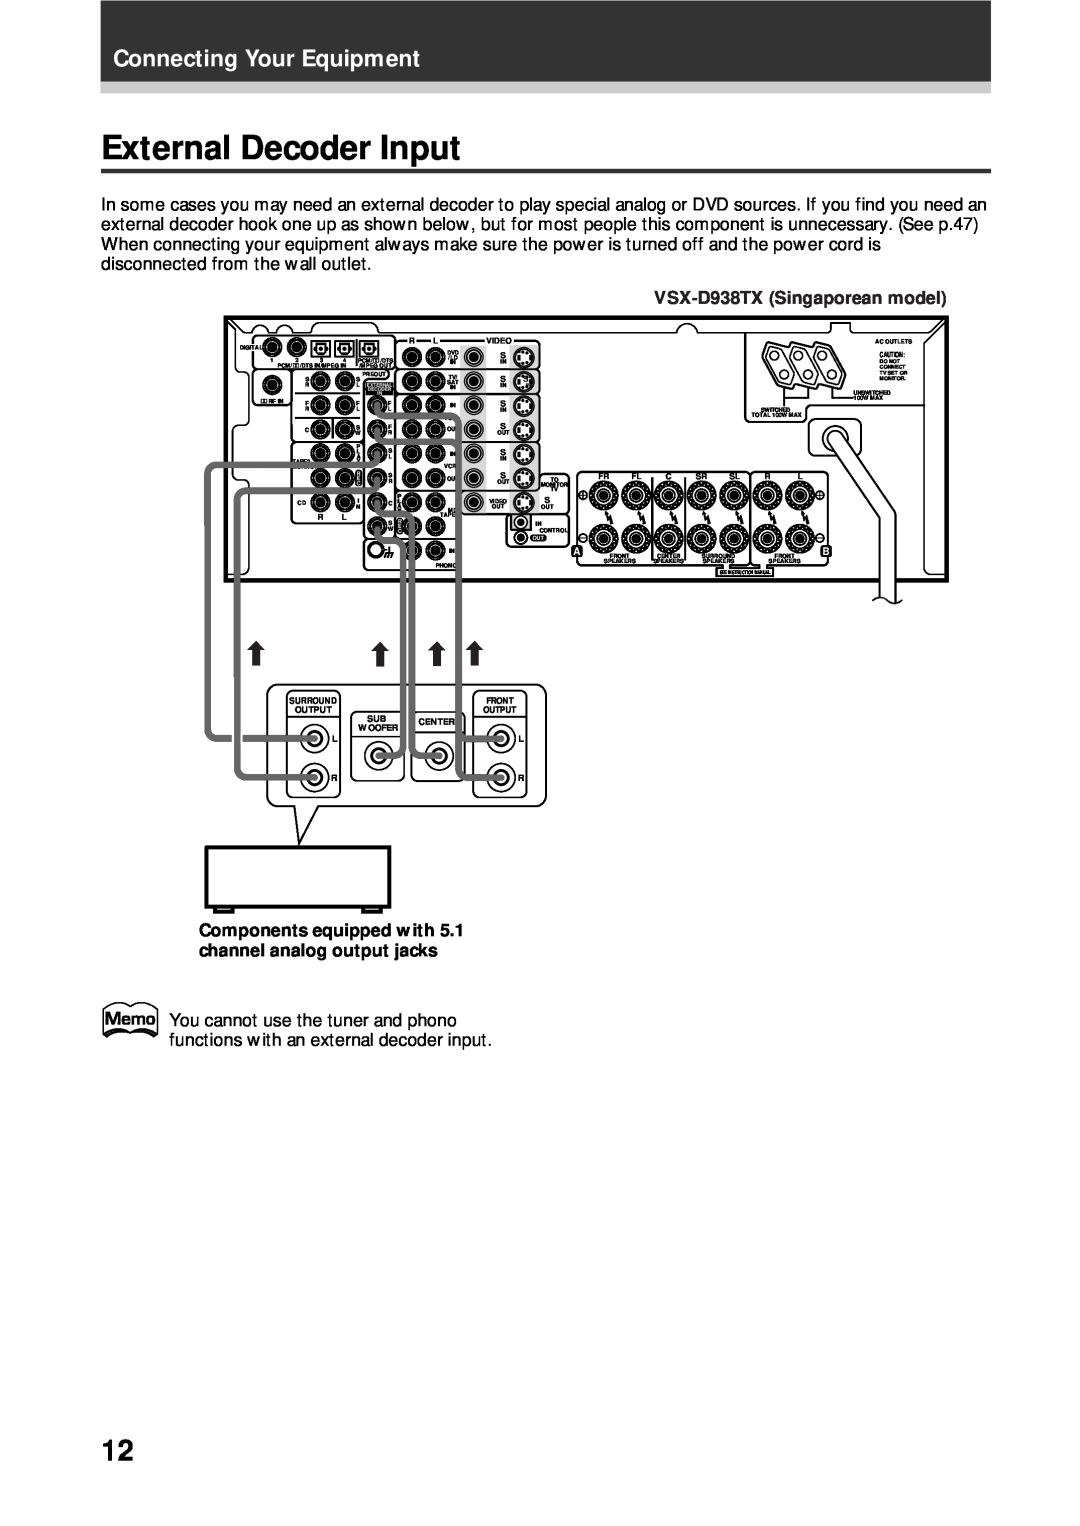 Pioneer VSX-D908TX-G manual External Decoder Input, È Èè, Connecting Your Equipment, VSX-D938TXSingaporean model 